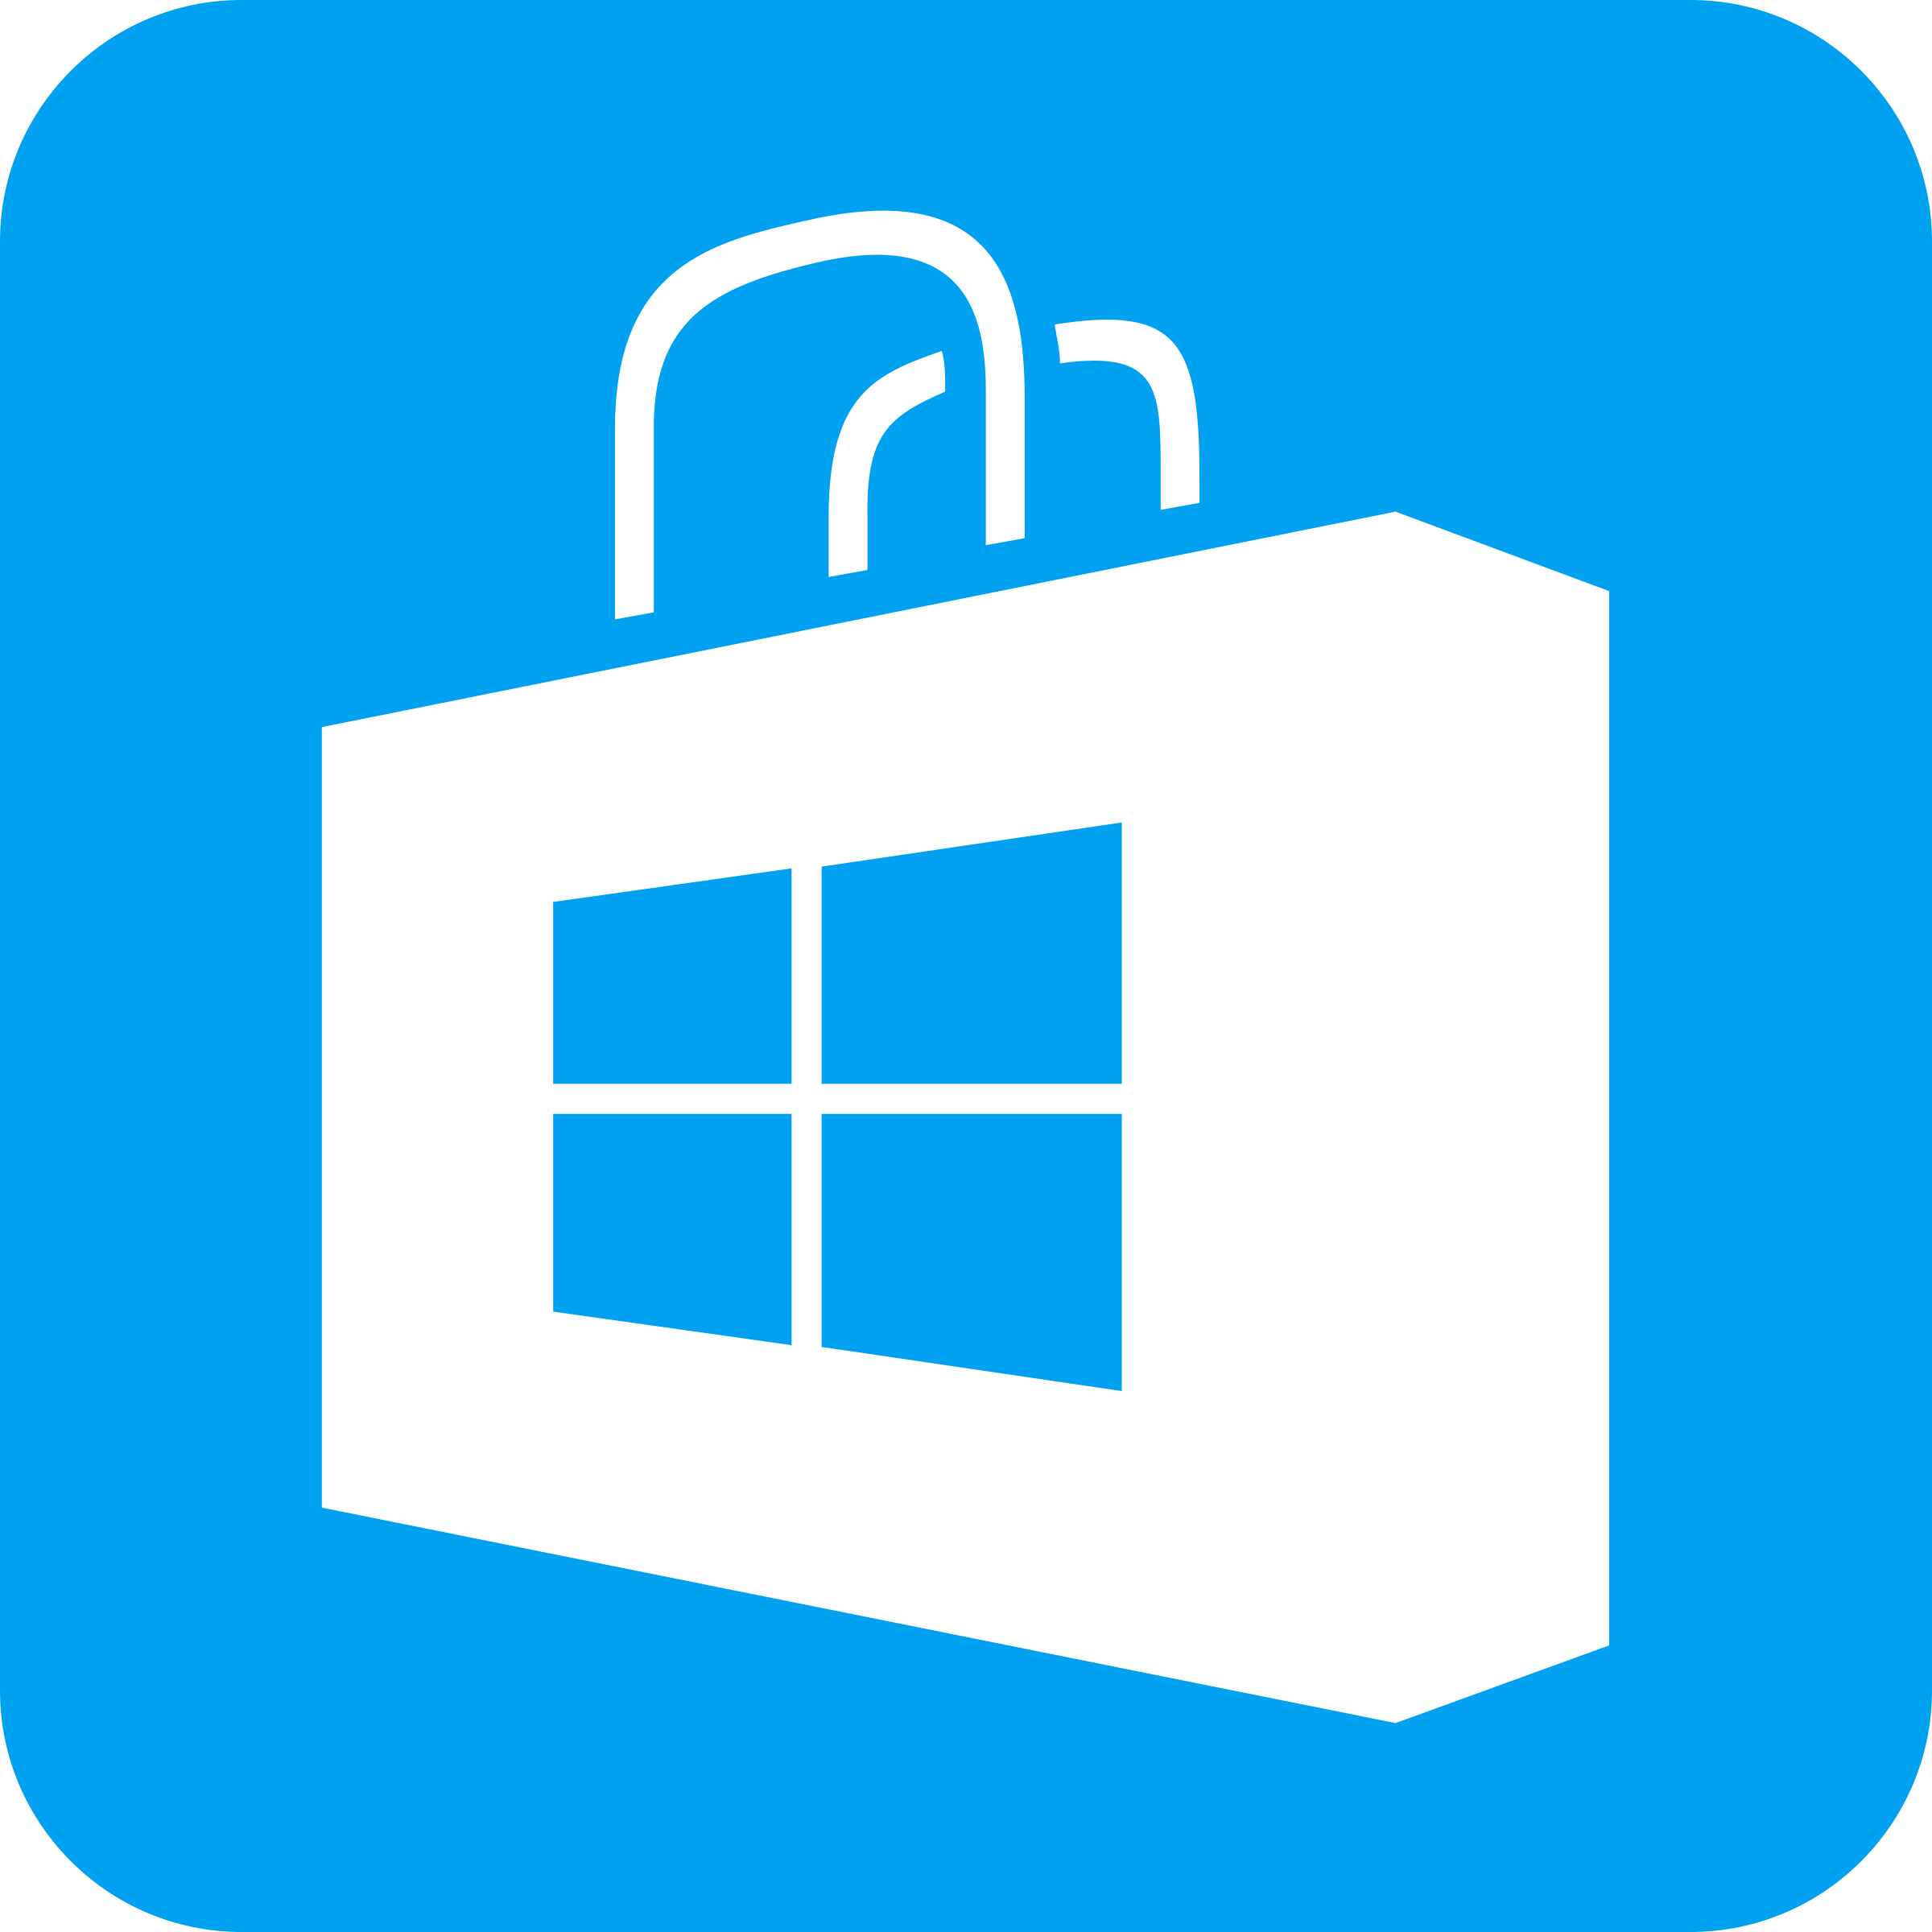 Windows Store Logo - Windows Store Logo PNG Transparent & SVG Vector - Freebie Supply